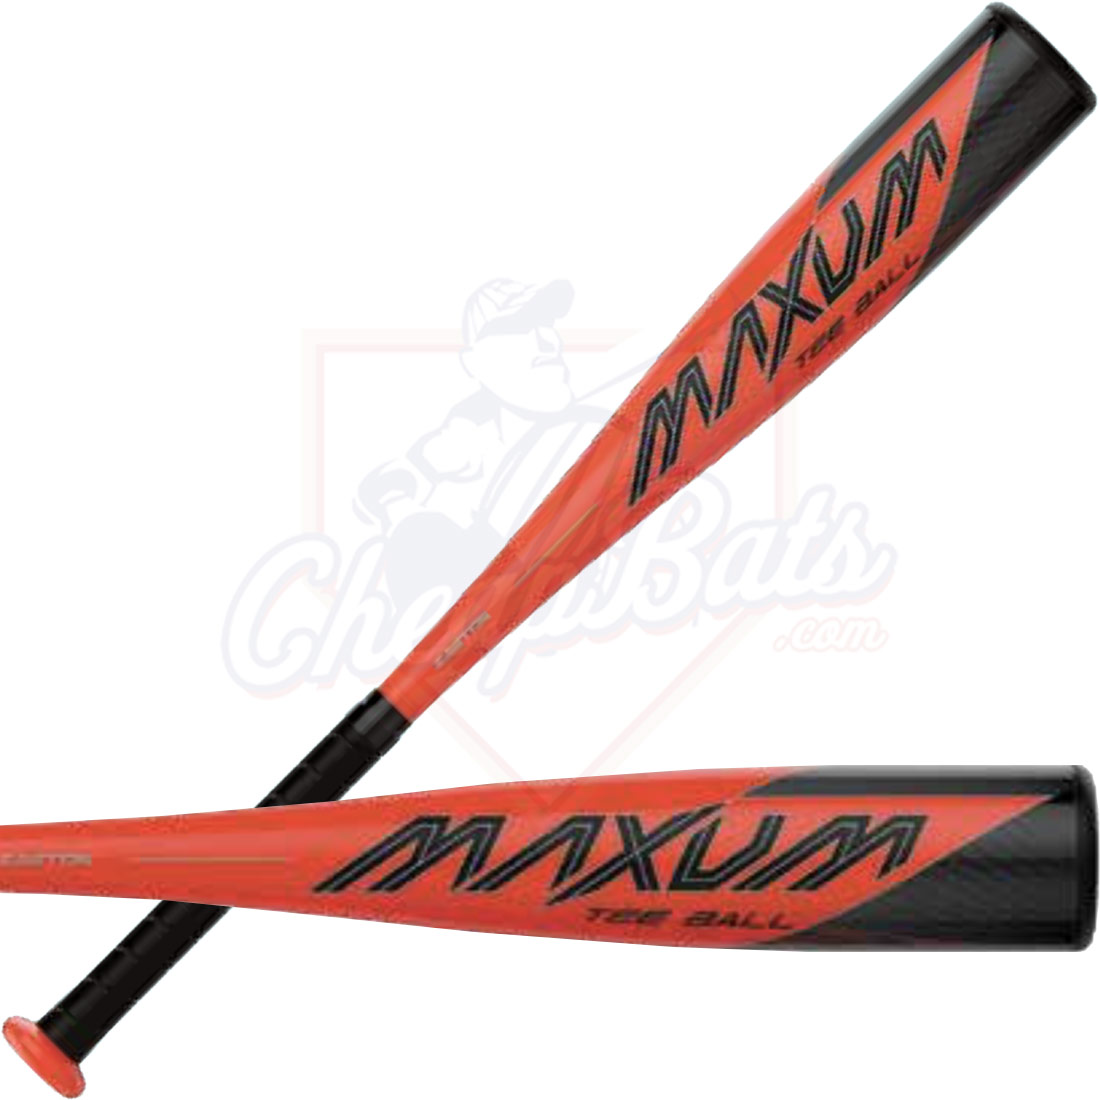 2022 Easton Maxum Youth USA Tee Ball Bat -11oz TB22MX11